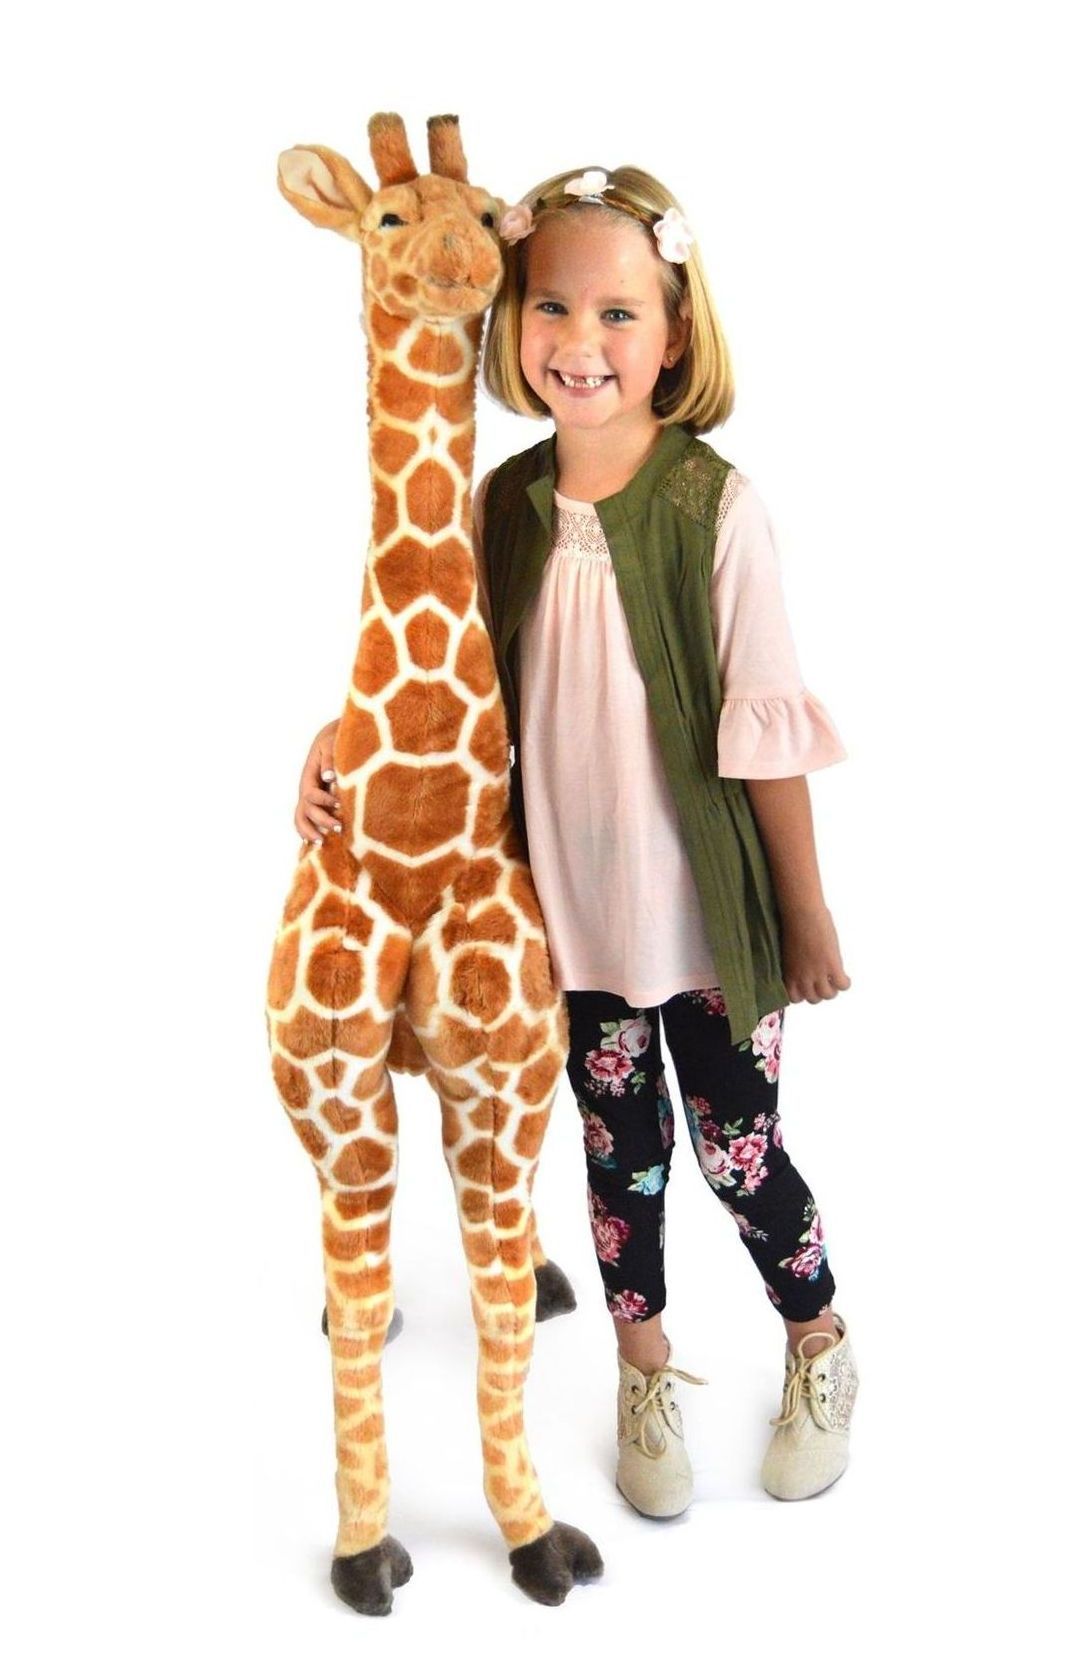 giant stuffed animal giraffe